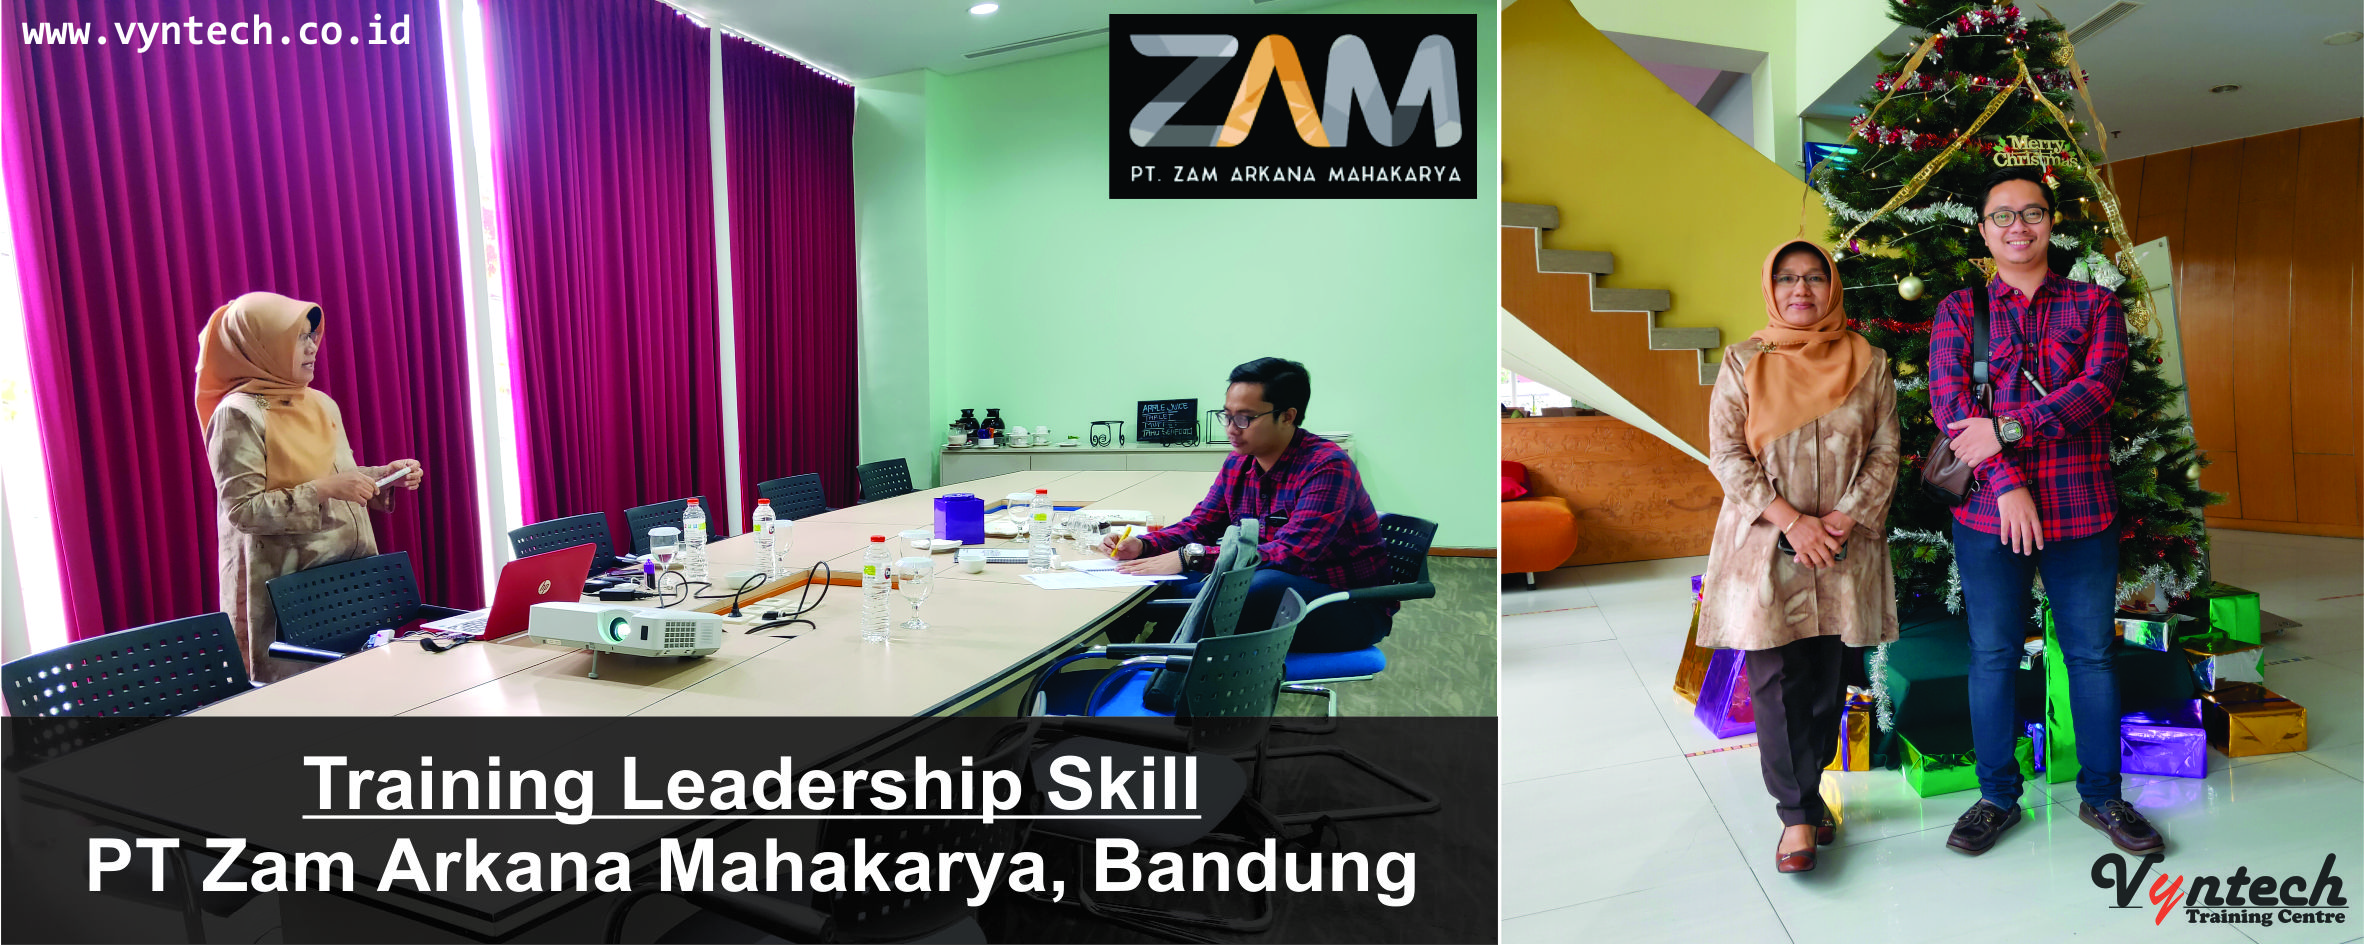 20191216 Training Leadership Skill - PT Zam Arkana Mahakarya Bandung